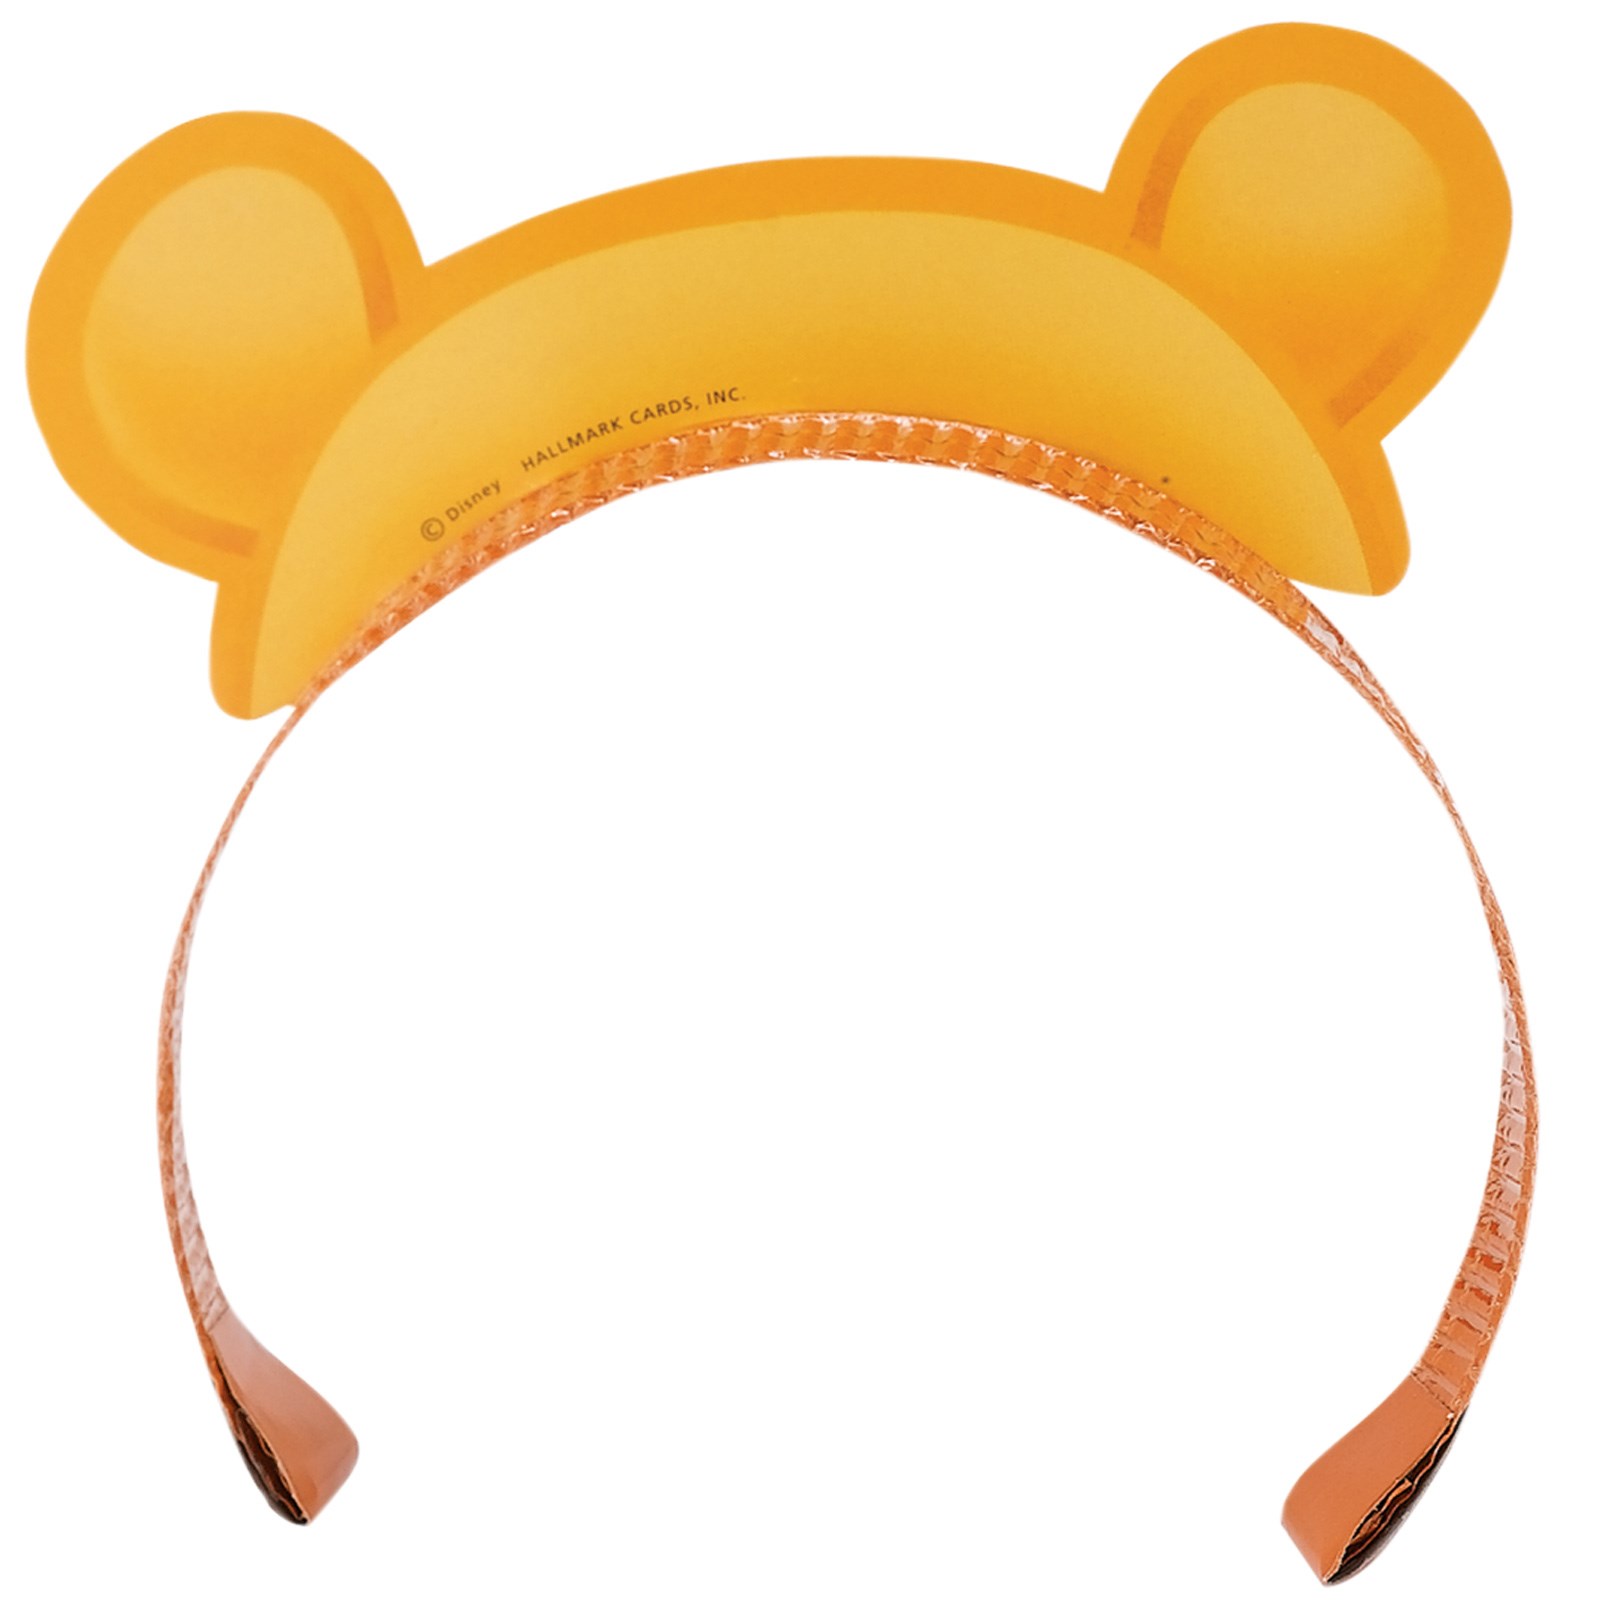 Disney Winnie the Pooh Paper Headbands 4 count